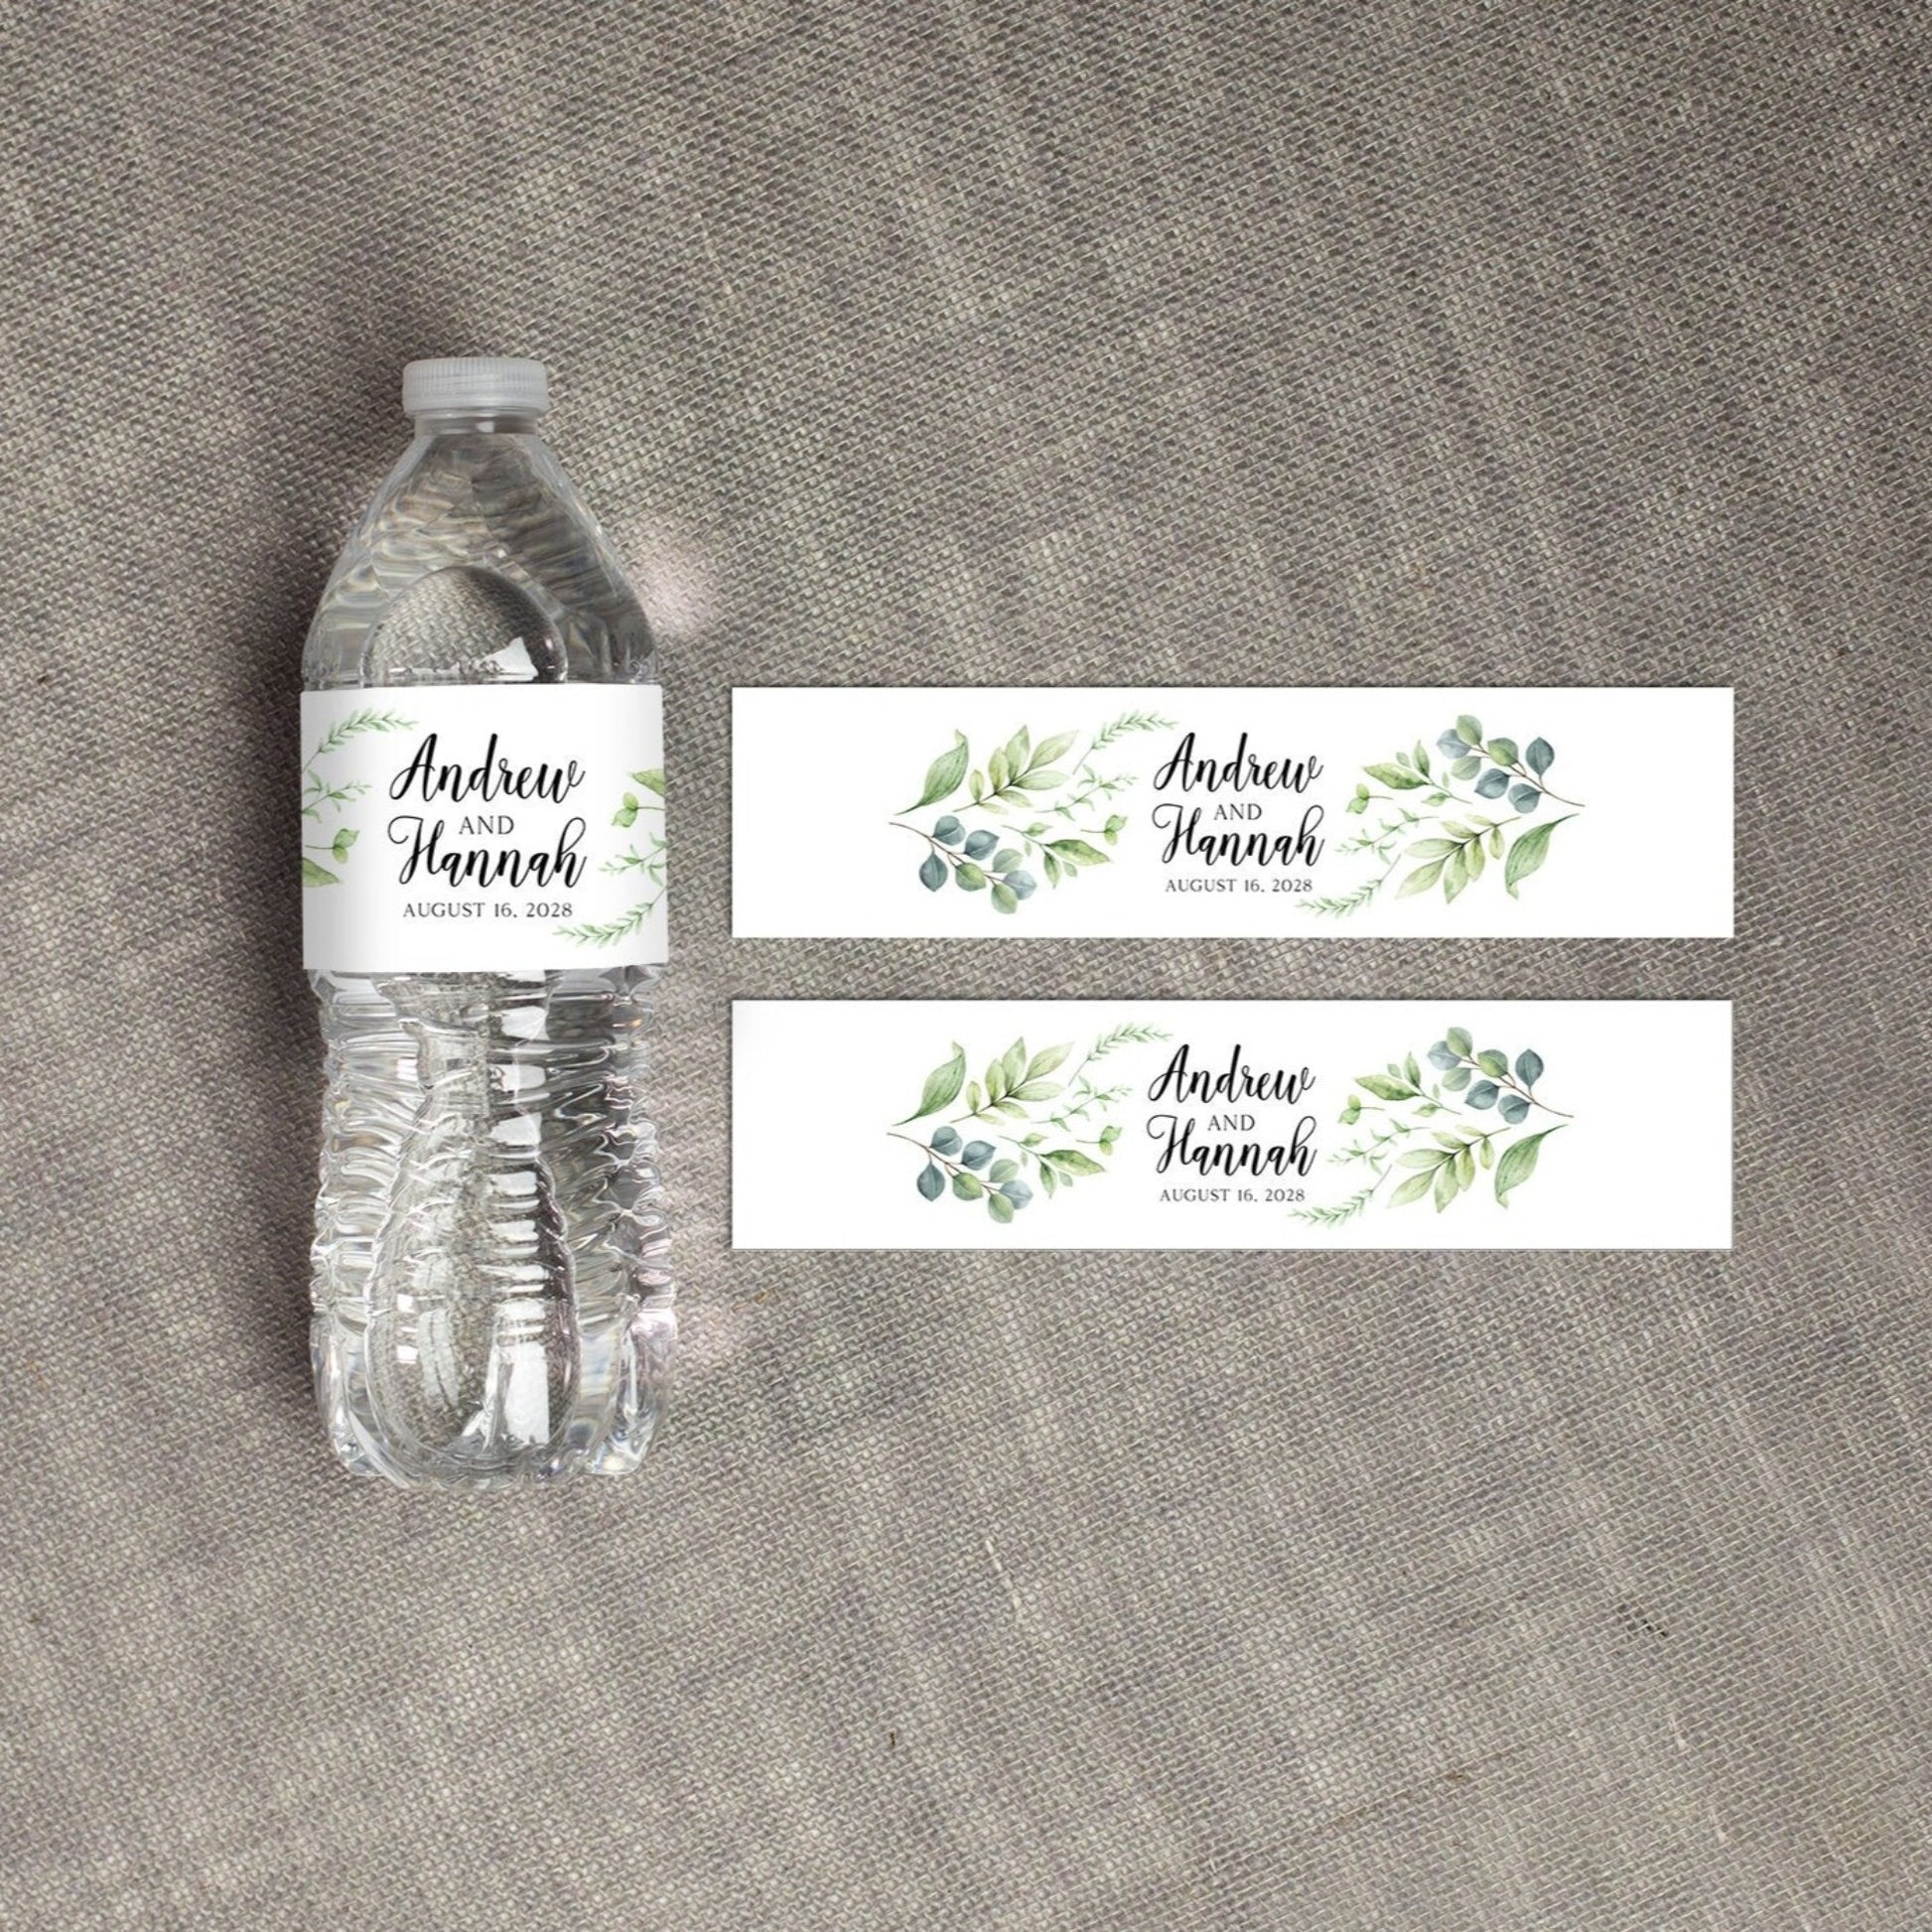 Wedding Water Bottle Label - Botanical Water Bottle Label, Waterproof Label, Eucalyptus Branch Greenery, Wedding Welcome Bag, Printed Label